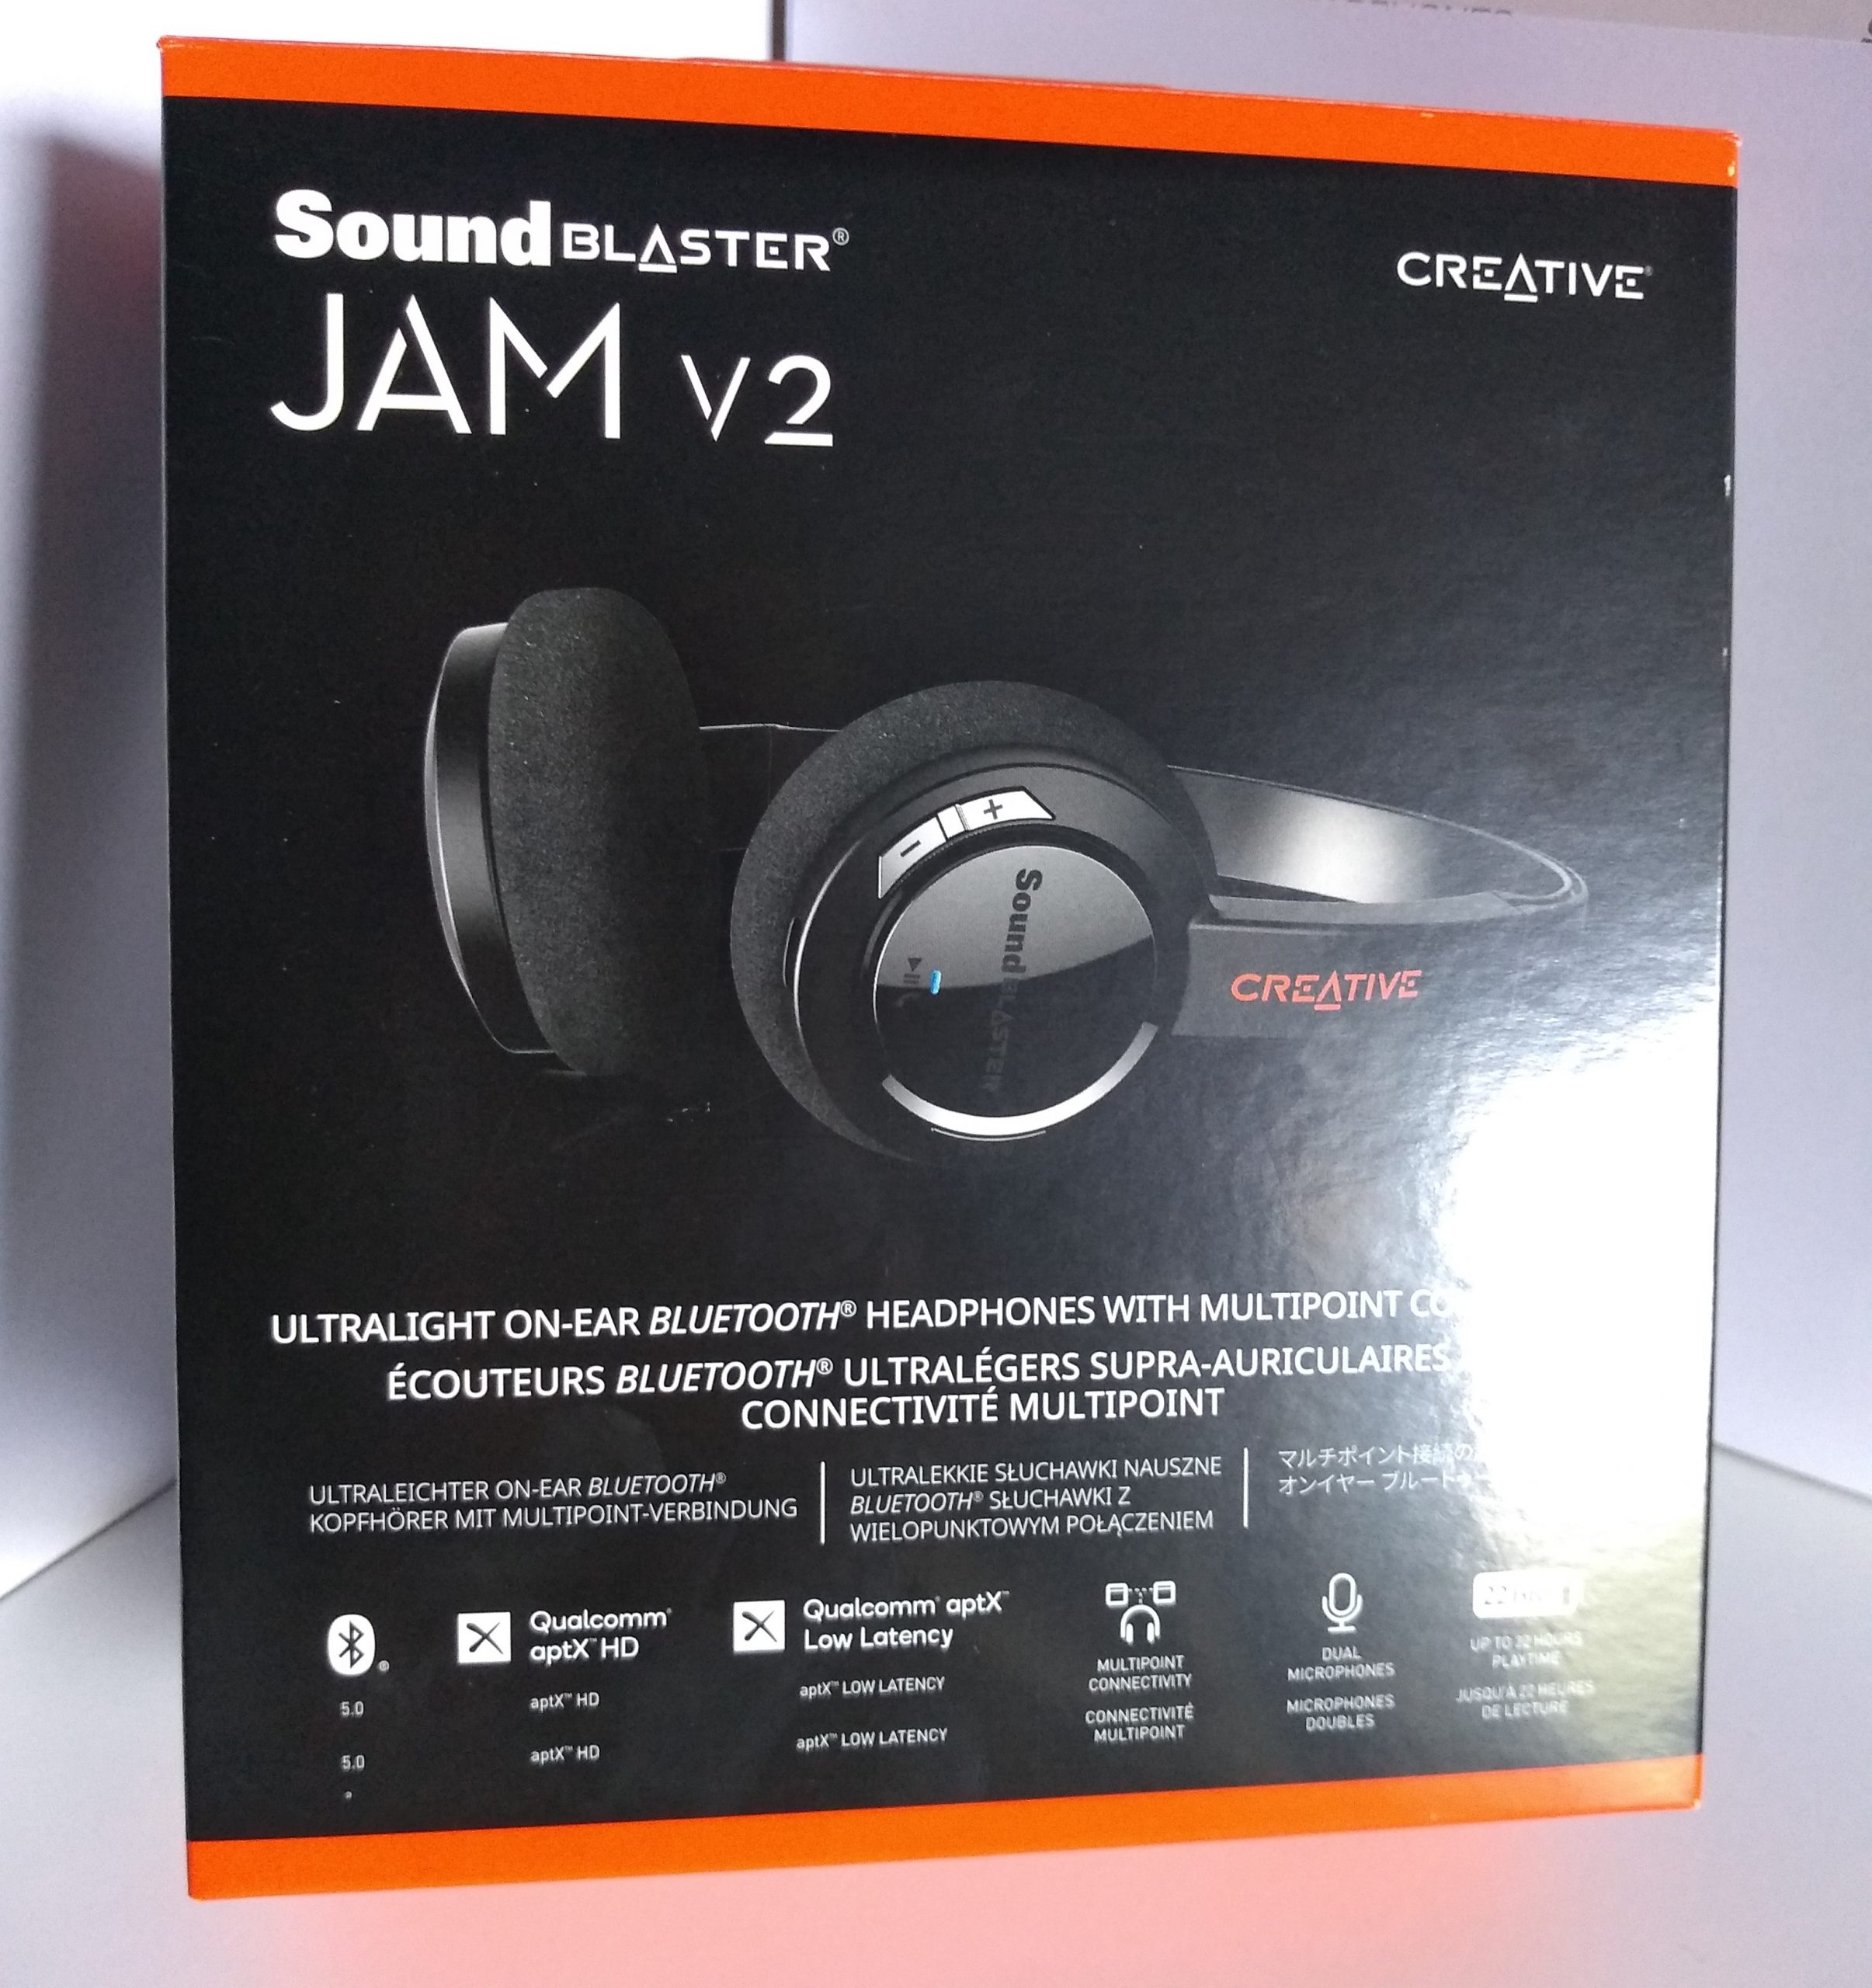 Creative jam v2. Creative Sound Blaster Jam v2.